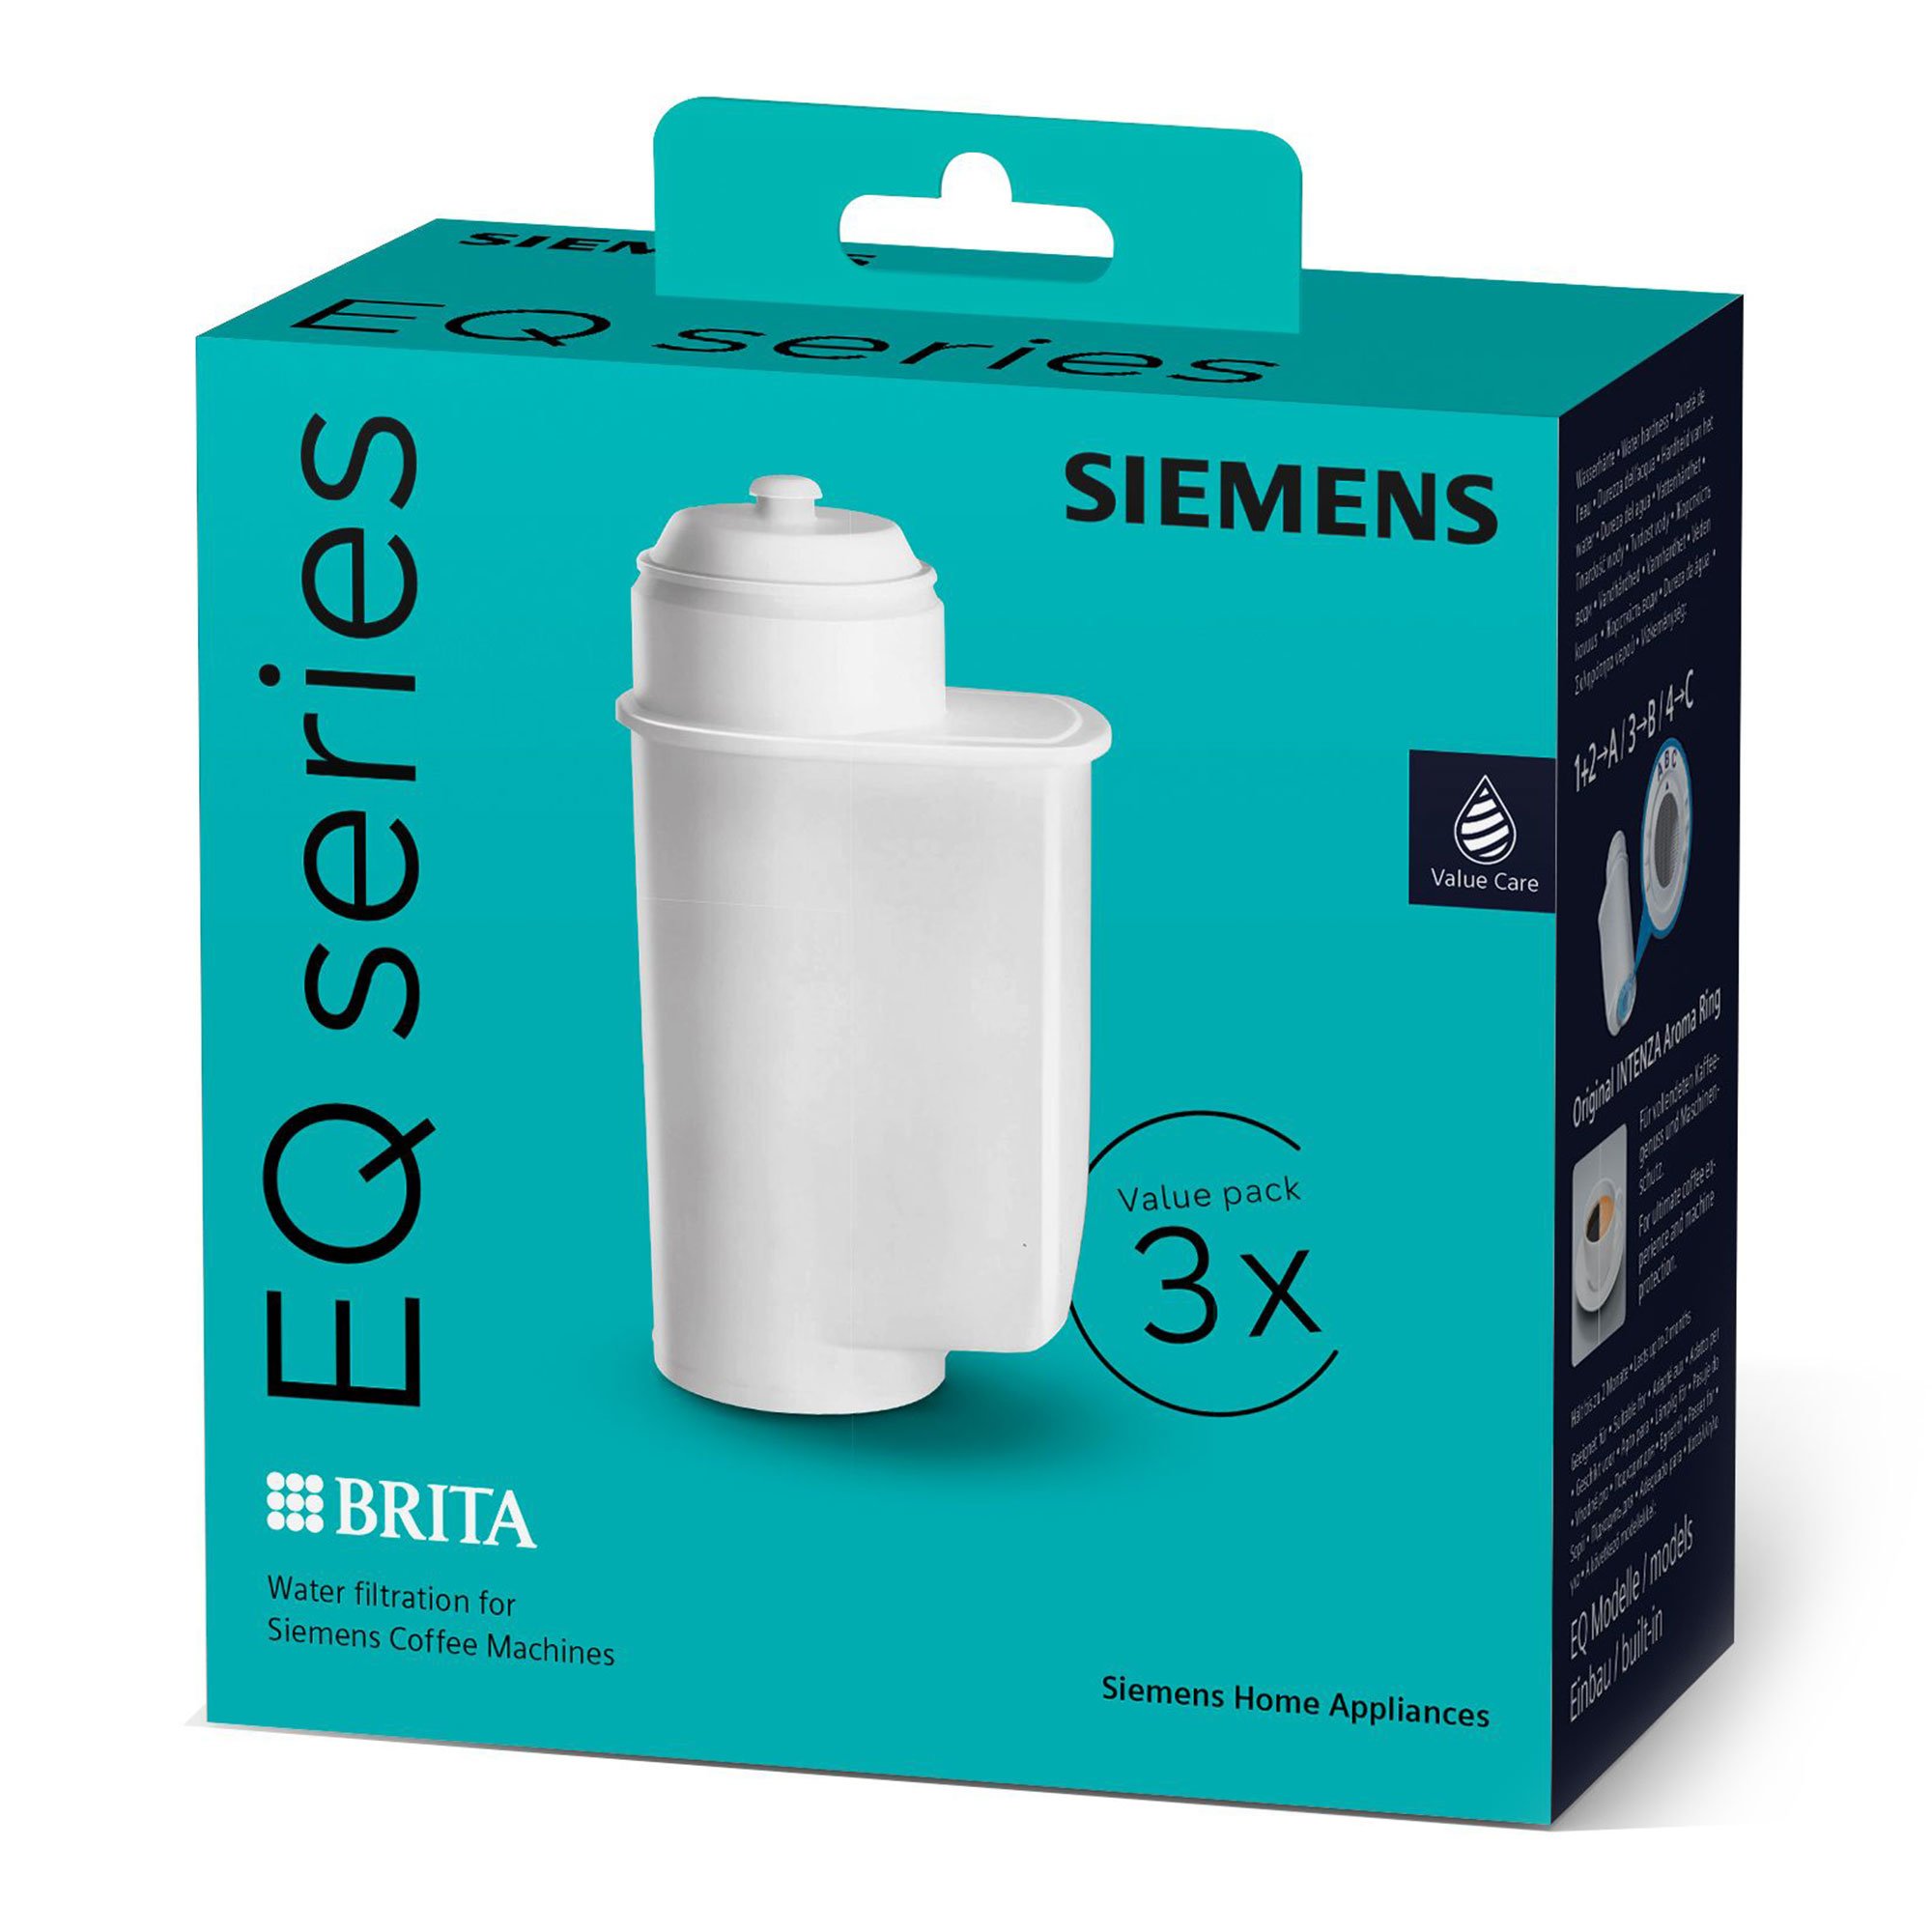 Siemens Vattenfilter till Espresso Brita, 3 st